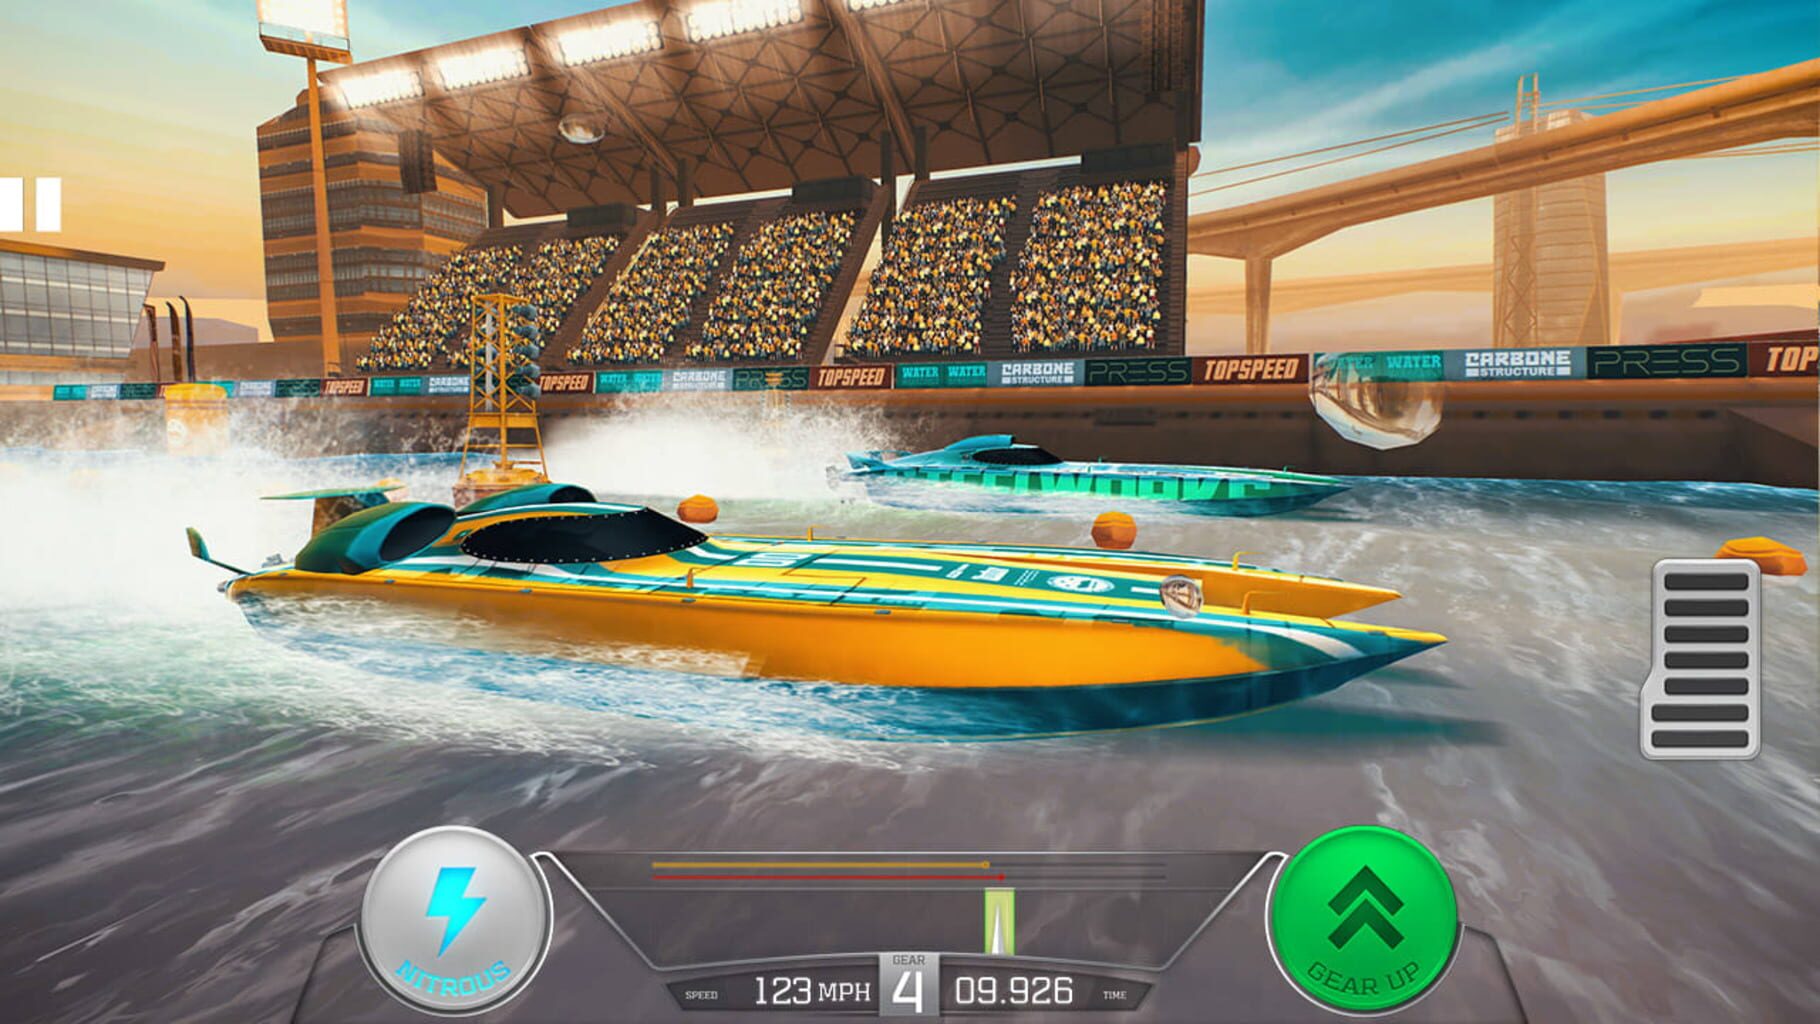 Top Boat screenshots